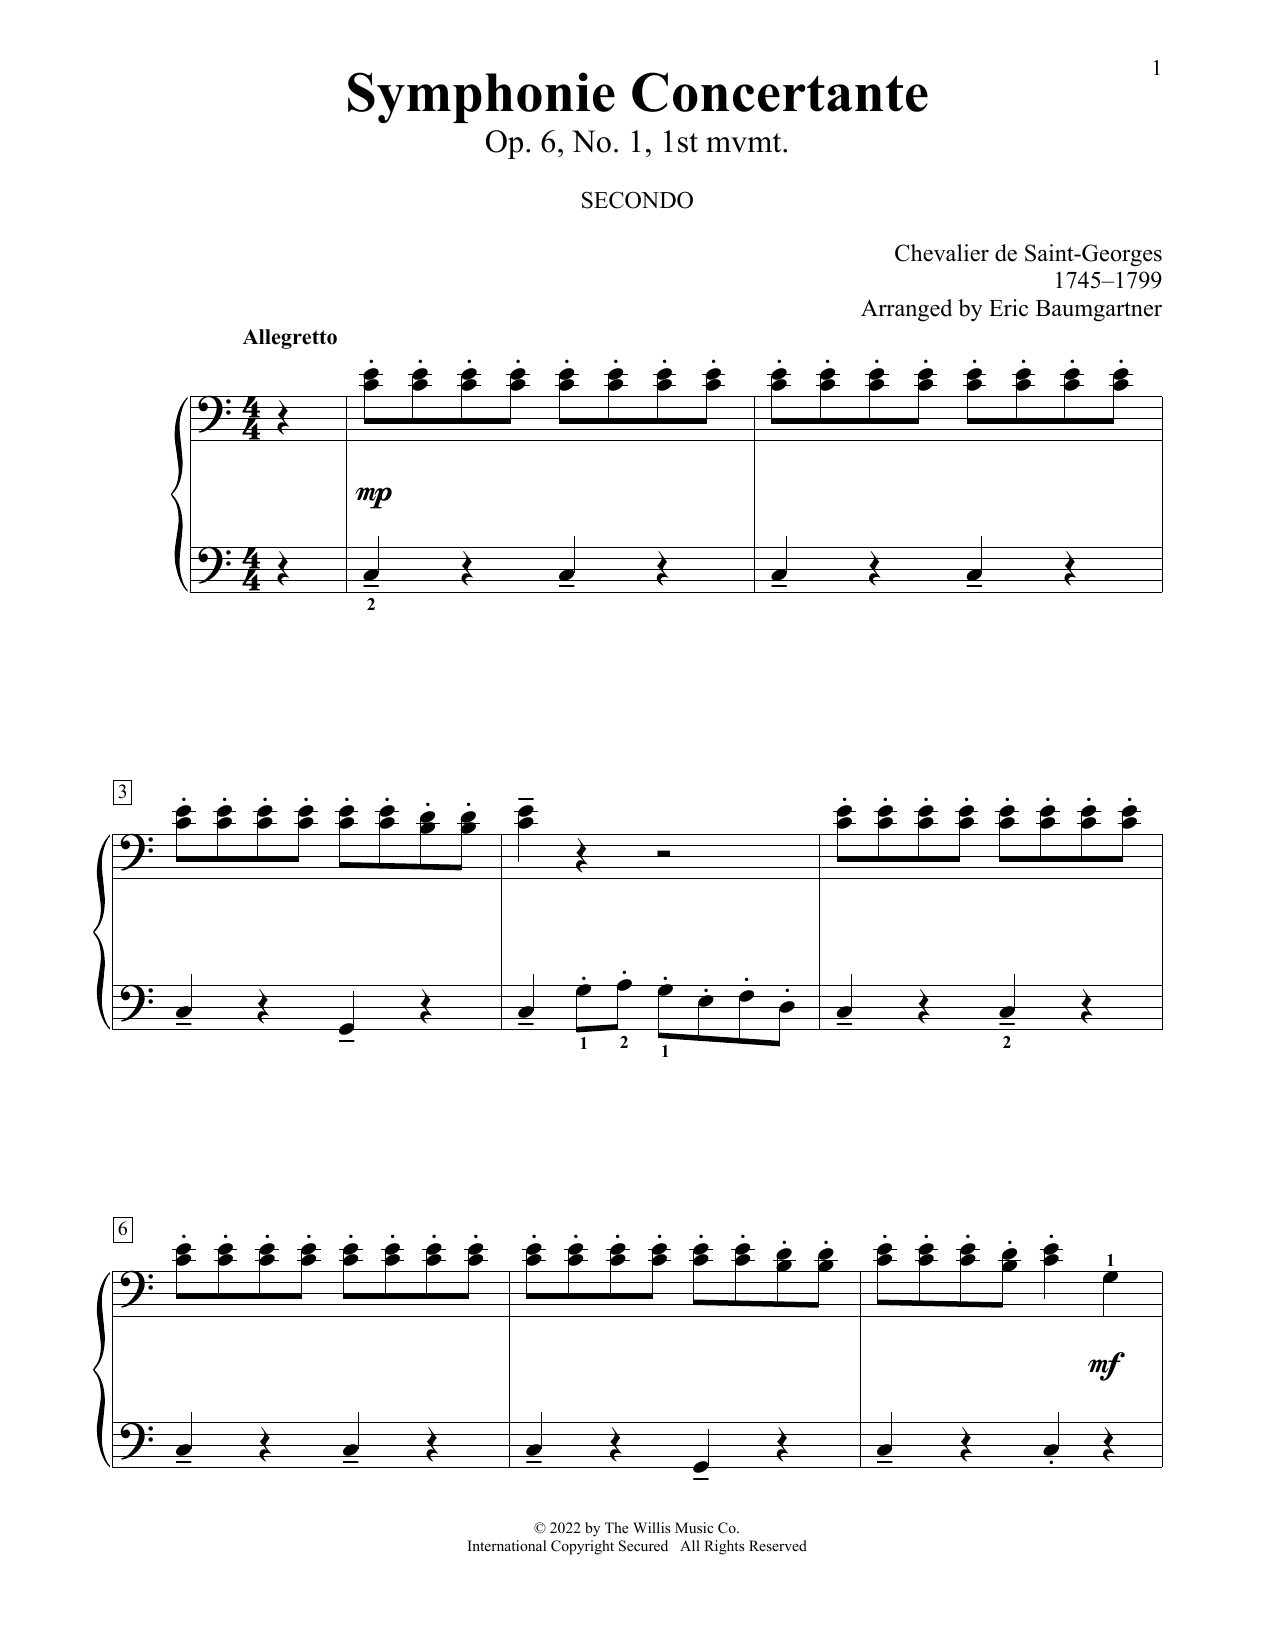 Chevalier de Saint-Georges Symphonie Concertante, Op. 6, No. 1, 1st Mvmt (arr. Eric Baumgartner) sheet music notes and chords arranged for Piano Duet